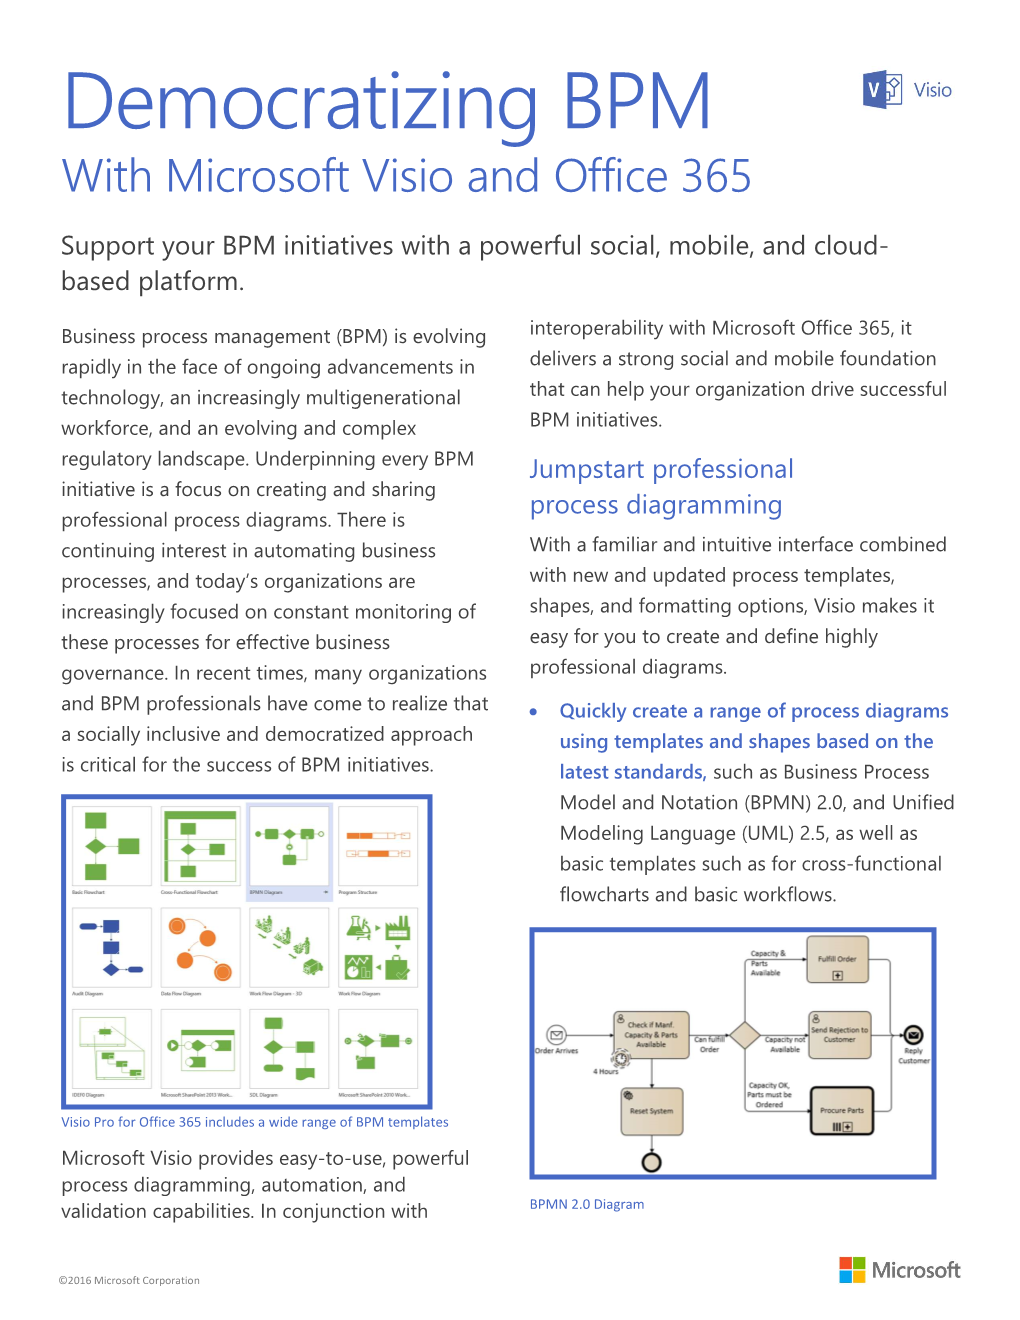 Democratizing BPM with Microsoft Visio and Office 365